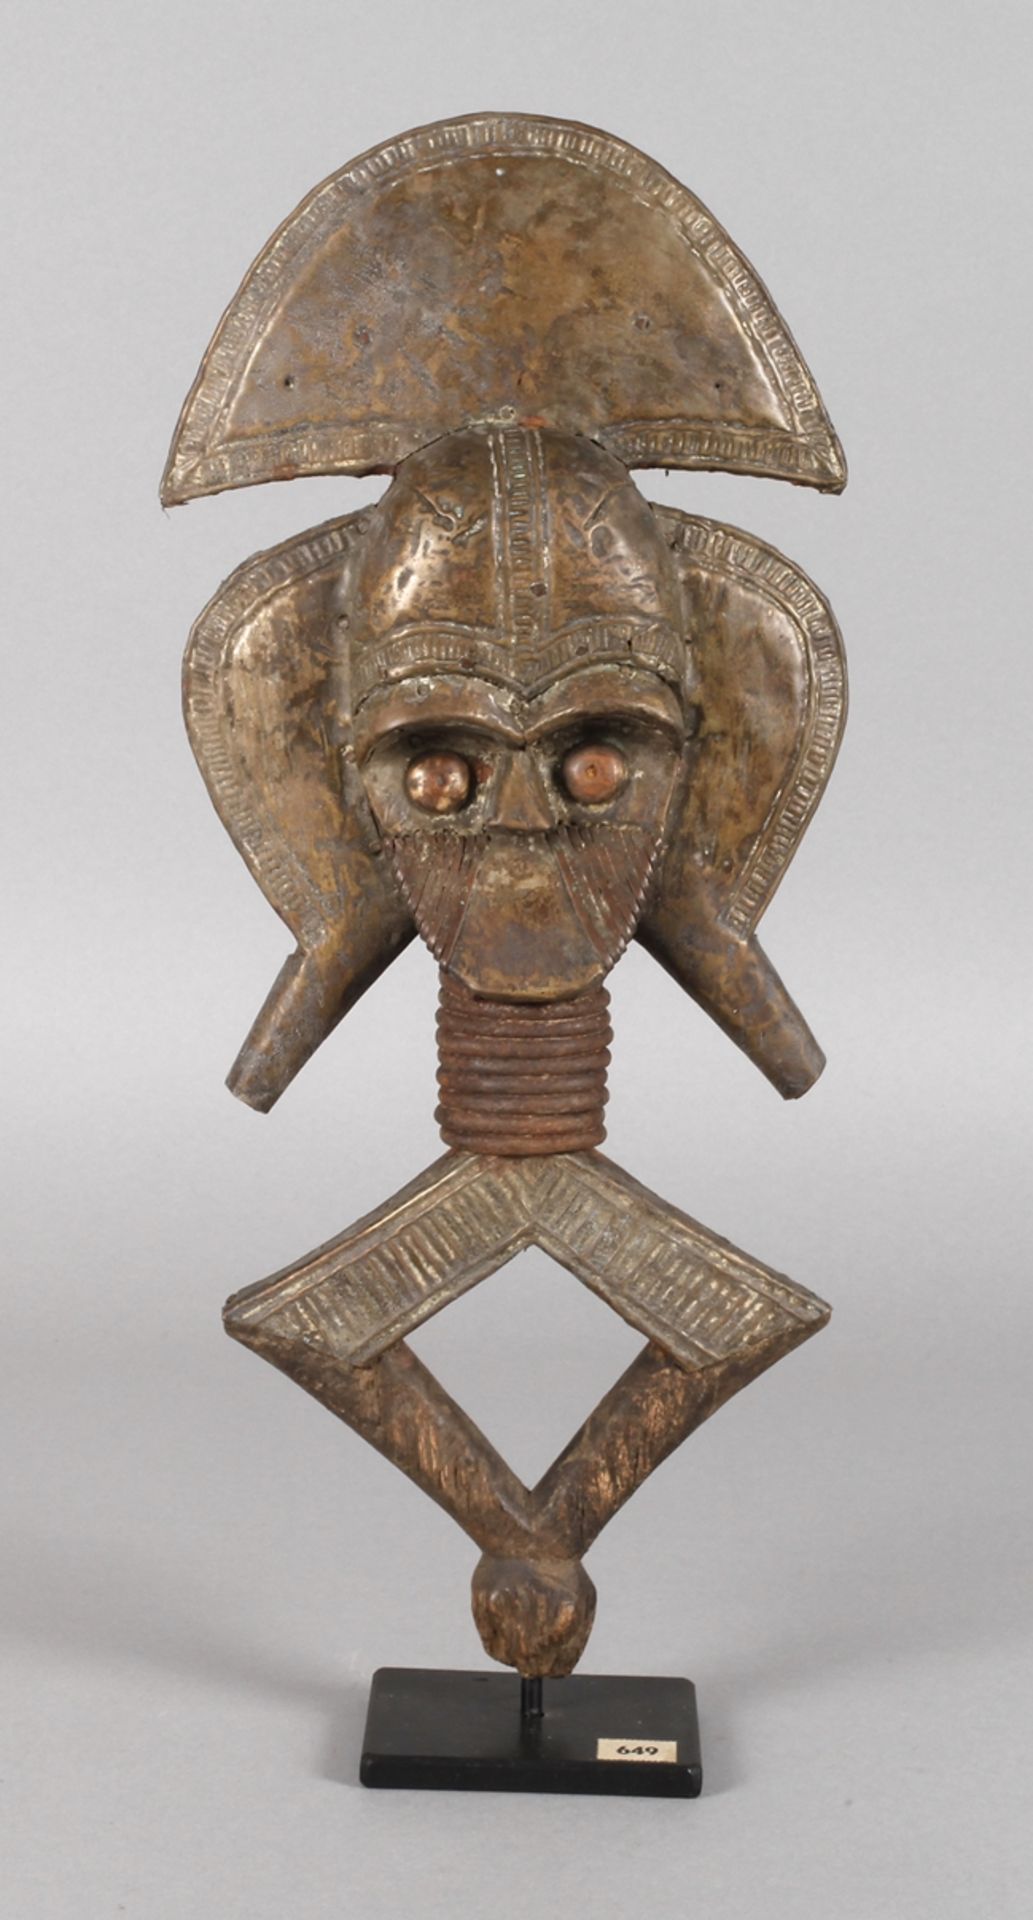 ReliquiarfigurGabun/Kongo, der Volksgruppe der Kota zugeordnet, auch Mbulu-Ngulu genannt, Tropenholz